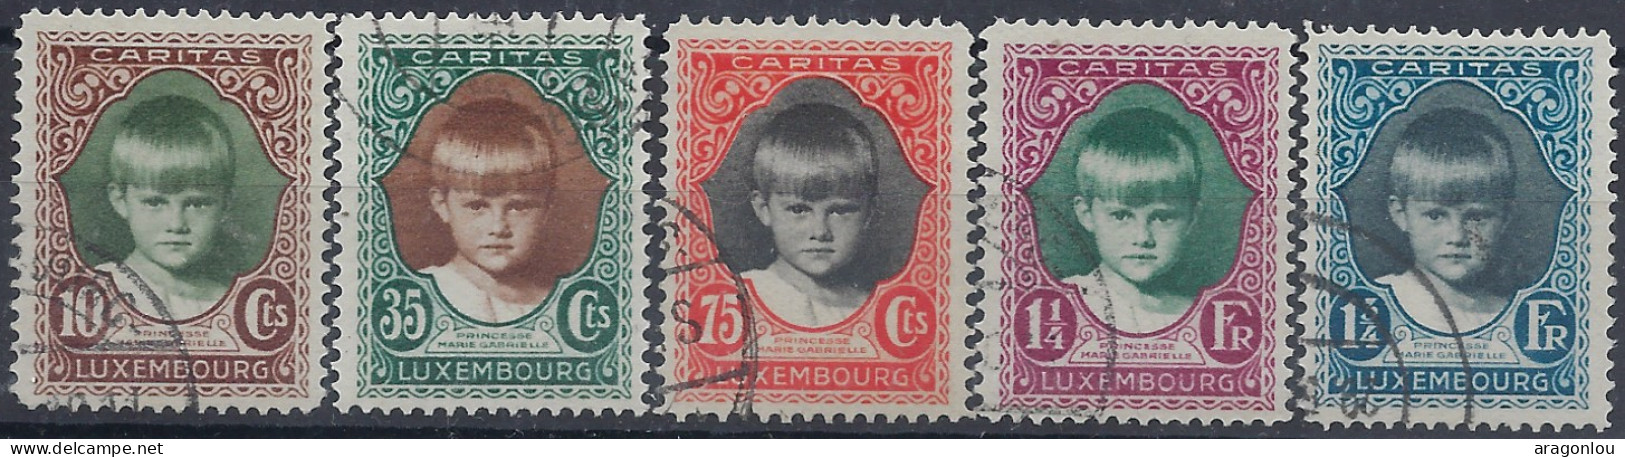 Luxembourg - Luxemburg - Timbres - 1929   Caritas   Princesse Marie-Gabrielle   Série   ° - Blocks & Kleinbögen